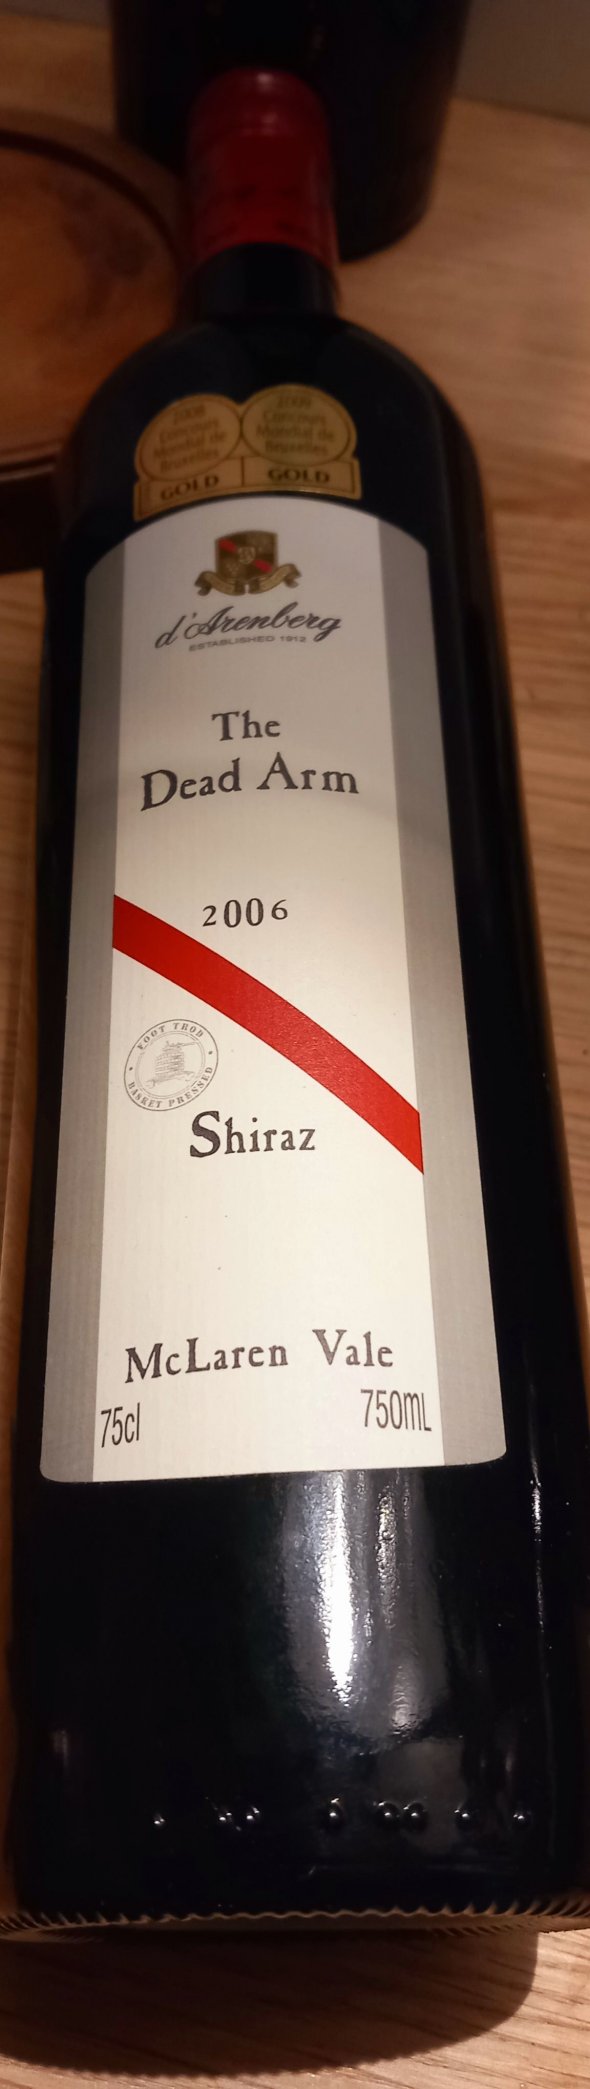 d'Arenberg, The Dead Arm Shiraz, McLaren Vale